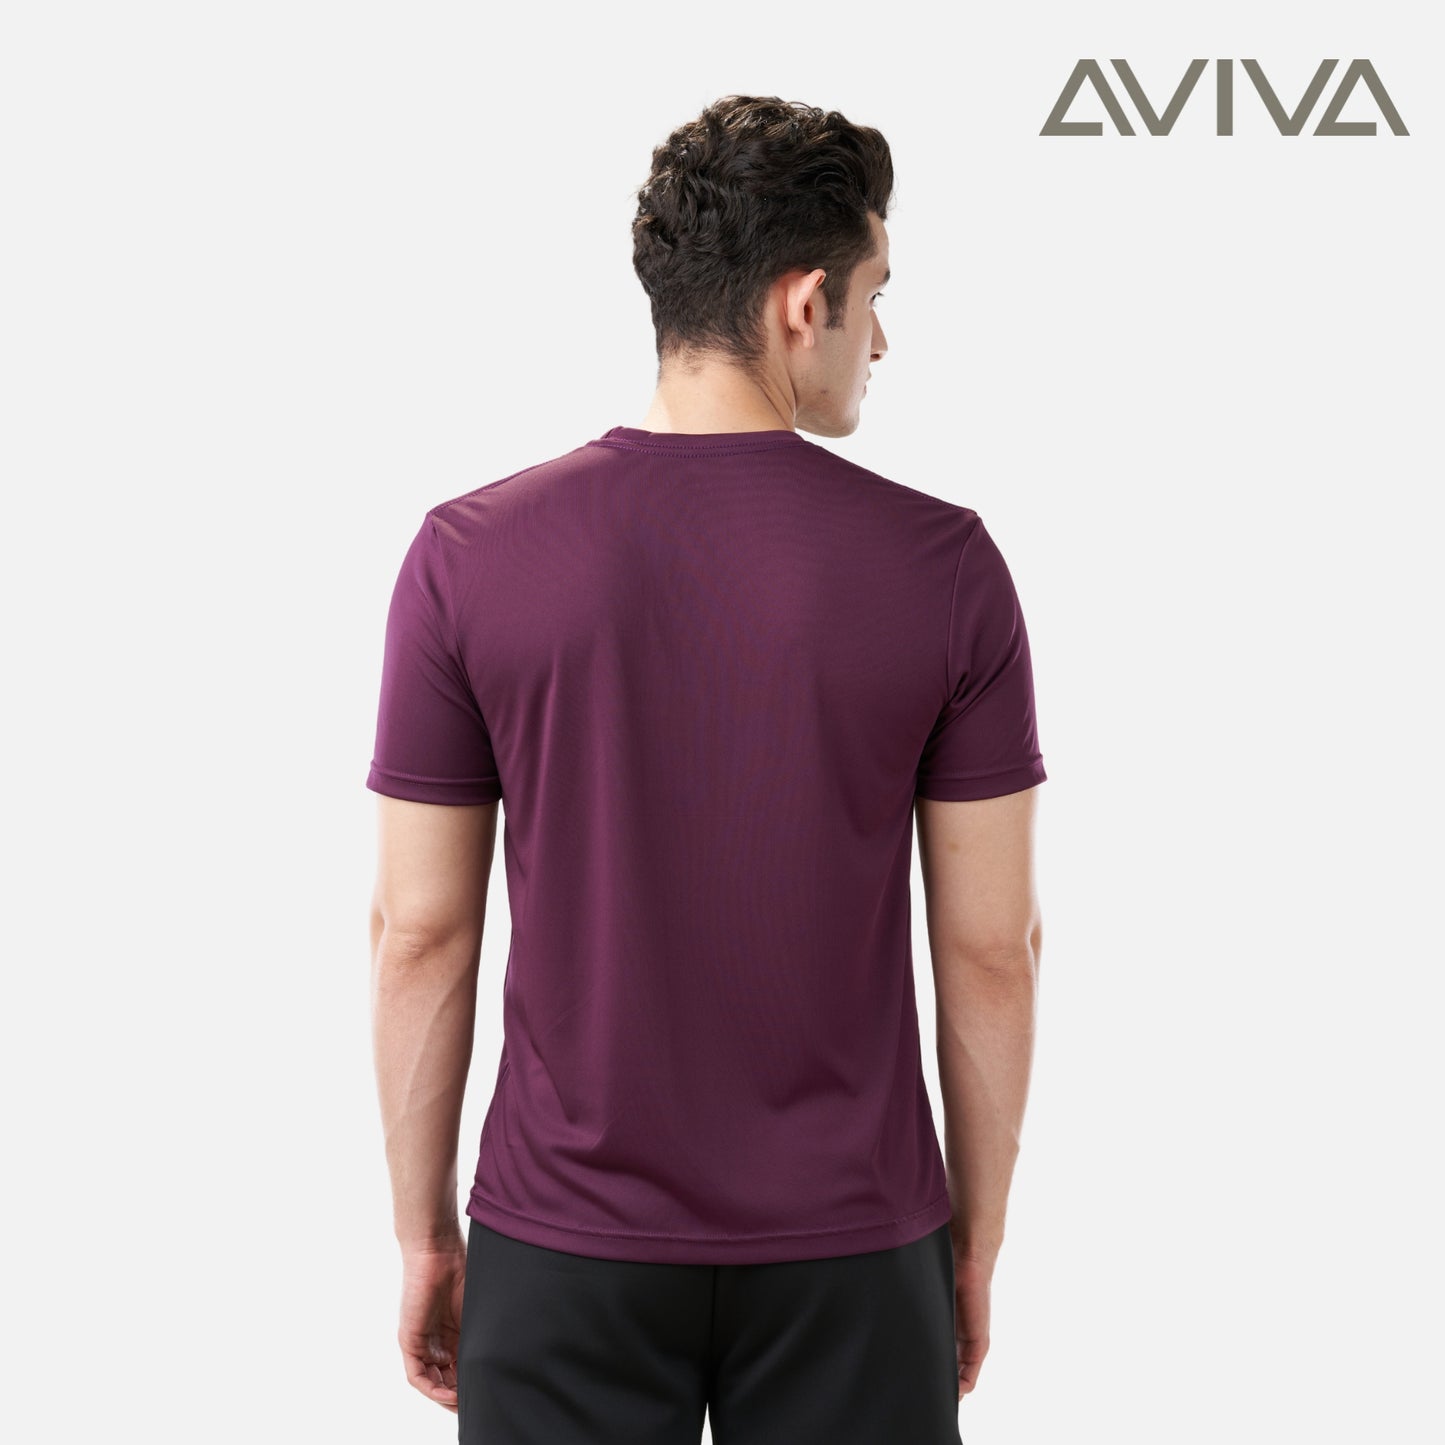 AVIVA Men's Graphic Short Sleeve Tee (91-8046)